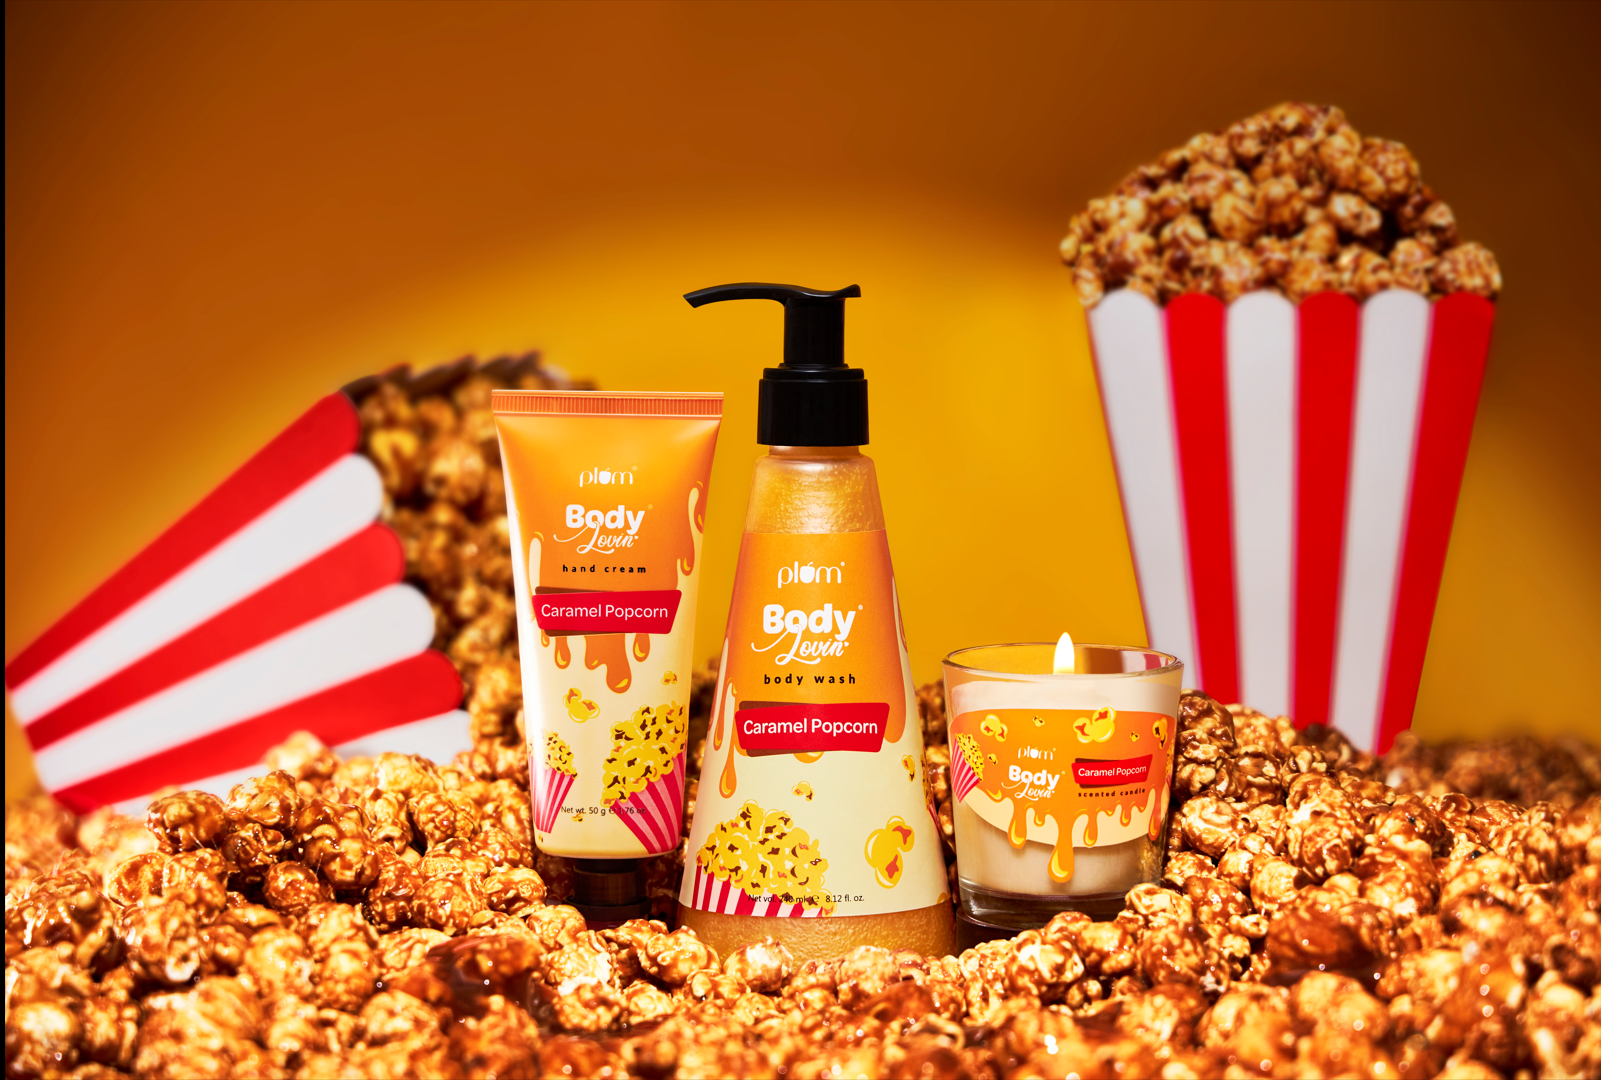 Caramel Popcorn BODYCARE? Yup, Plum BodyLovin’ made THAT happen!